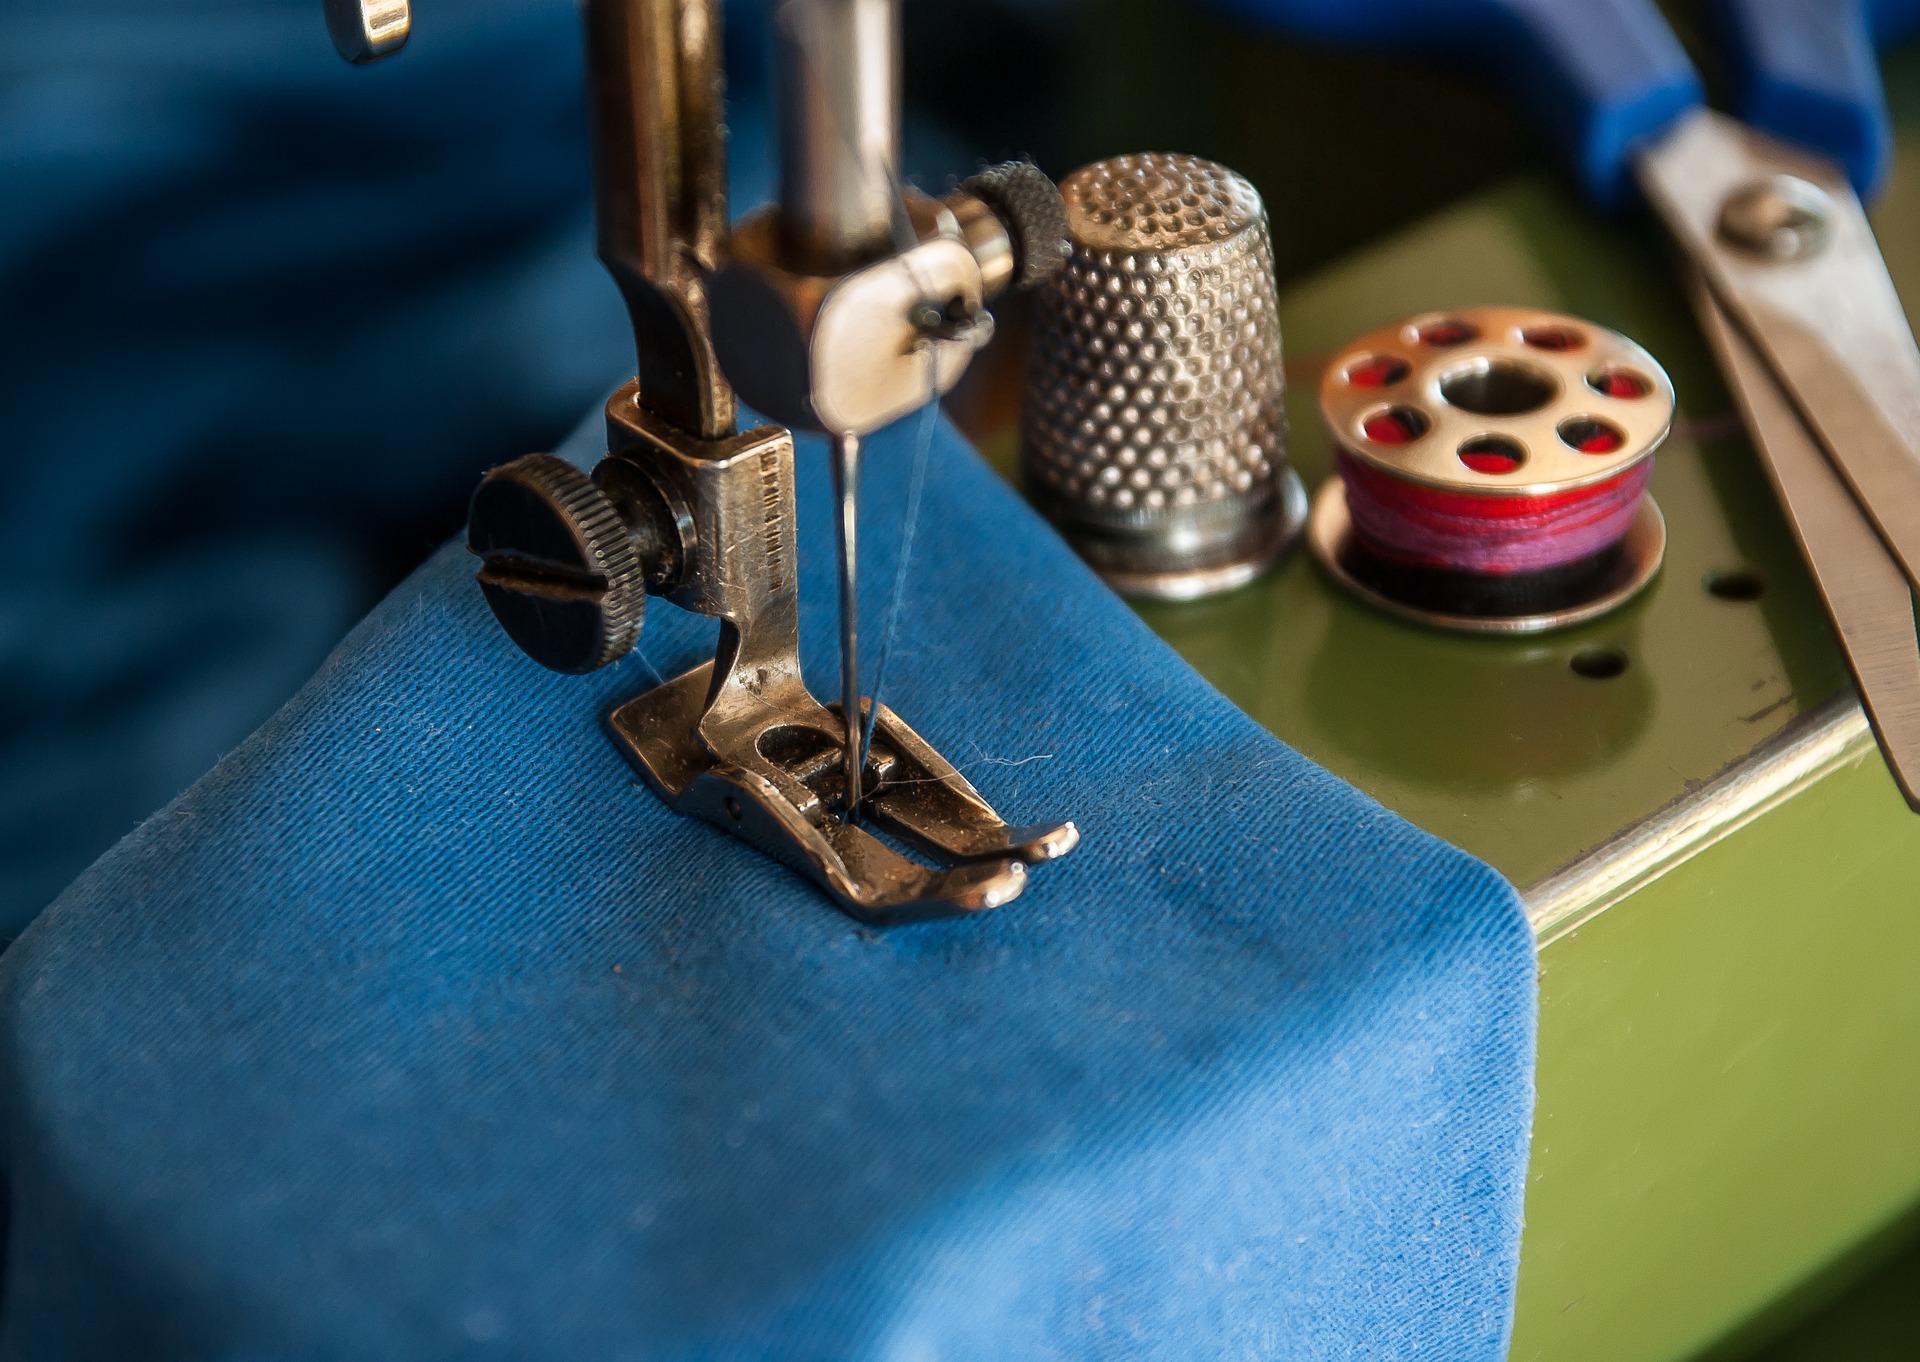 sewing-machine-1369658_1920.jpg